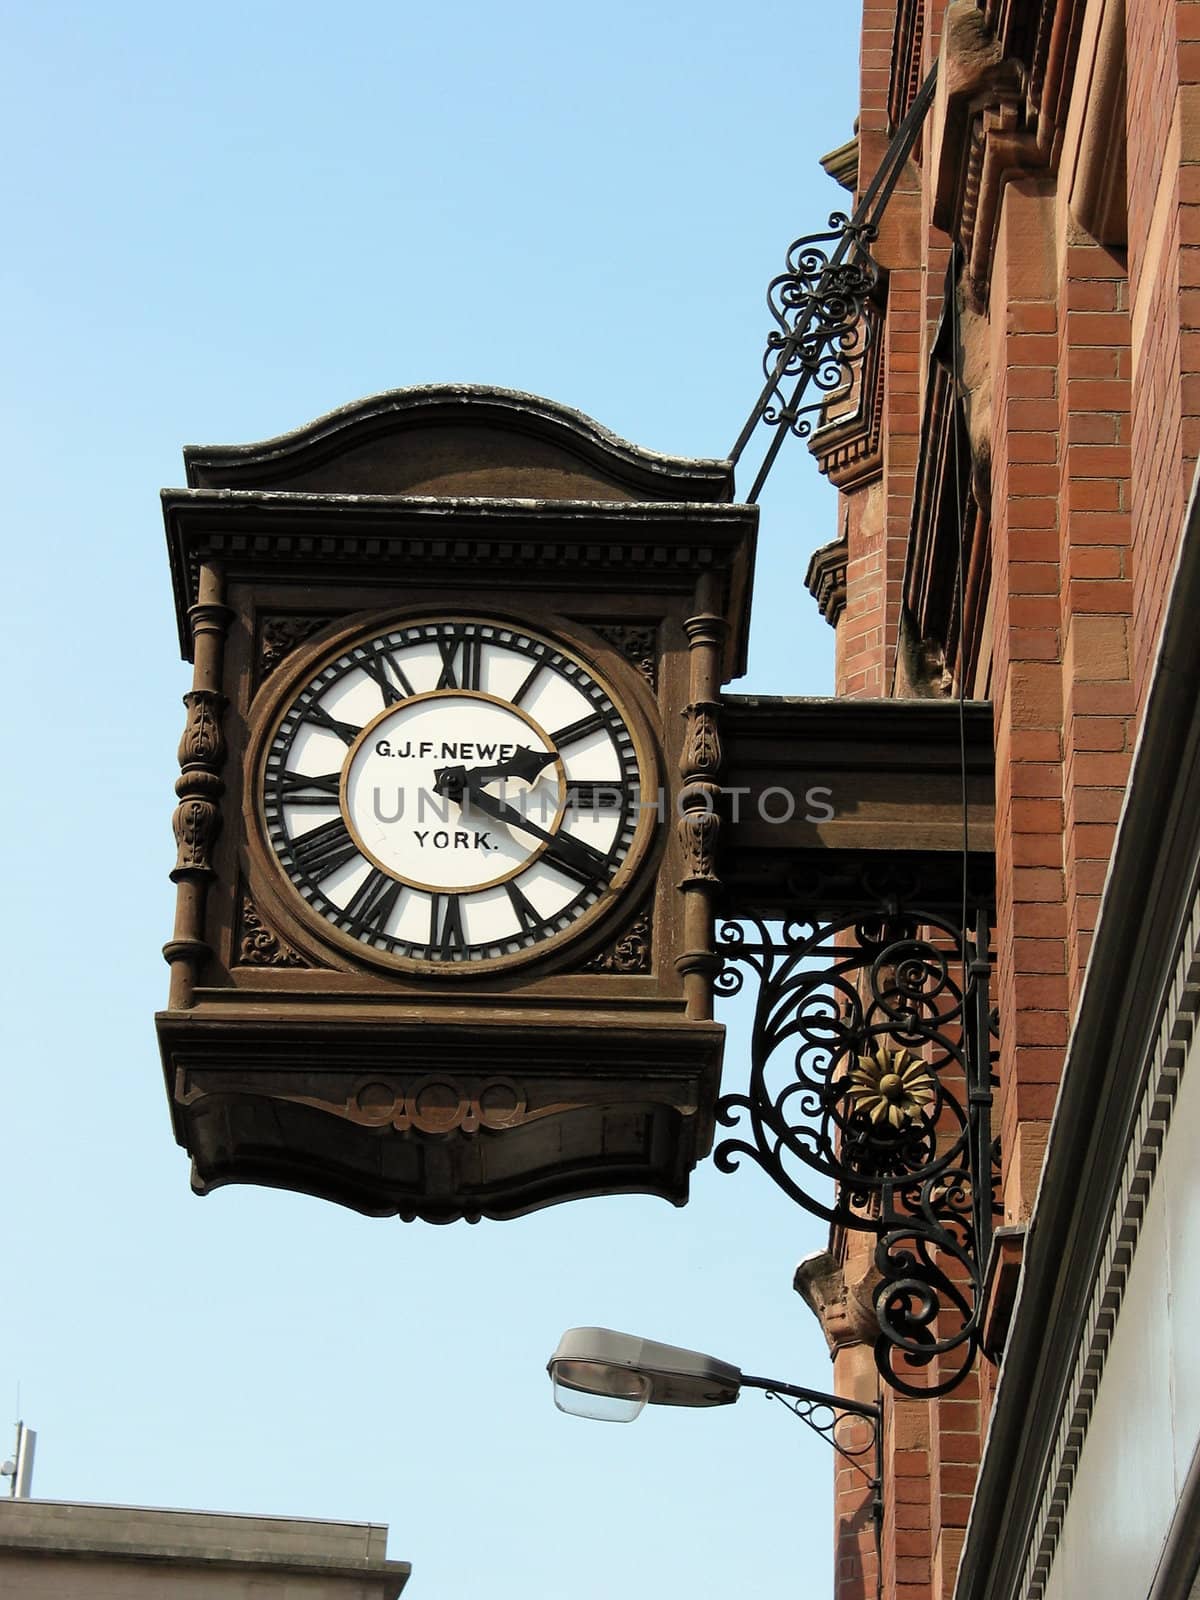 Clock in York by mizio1970